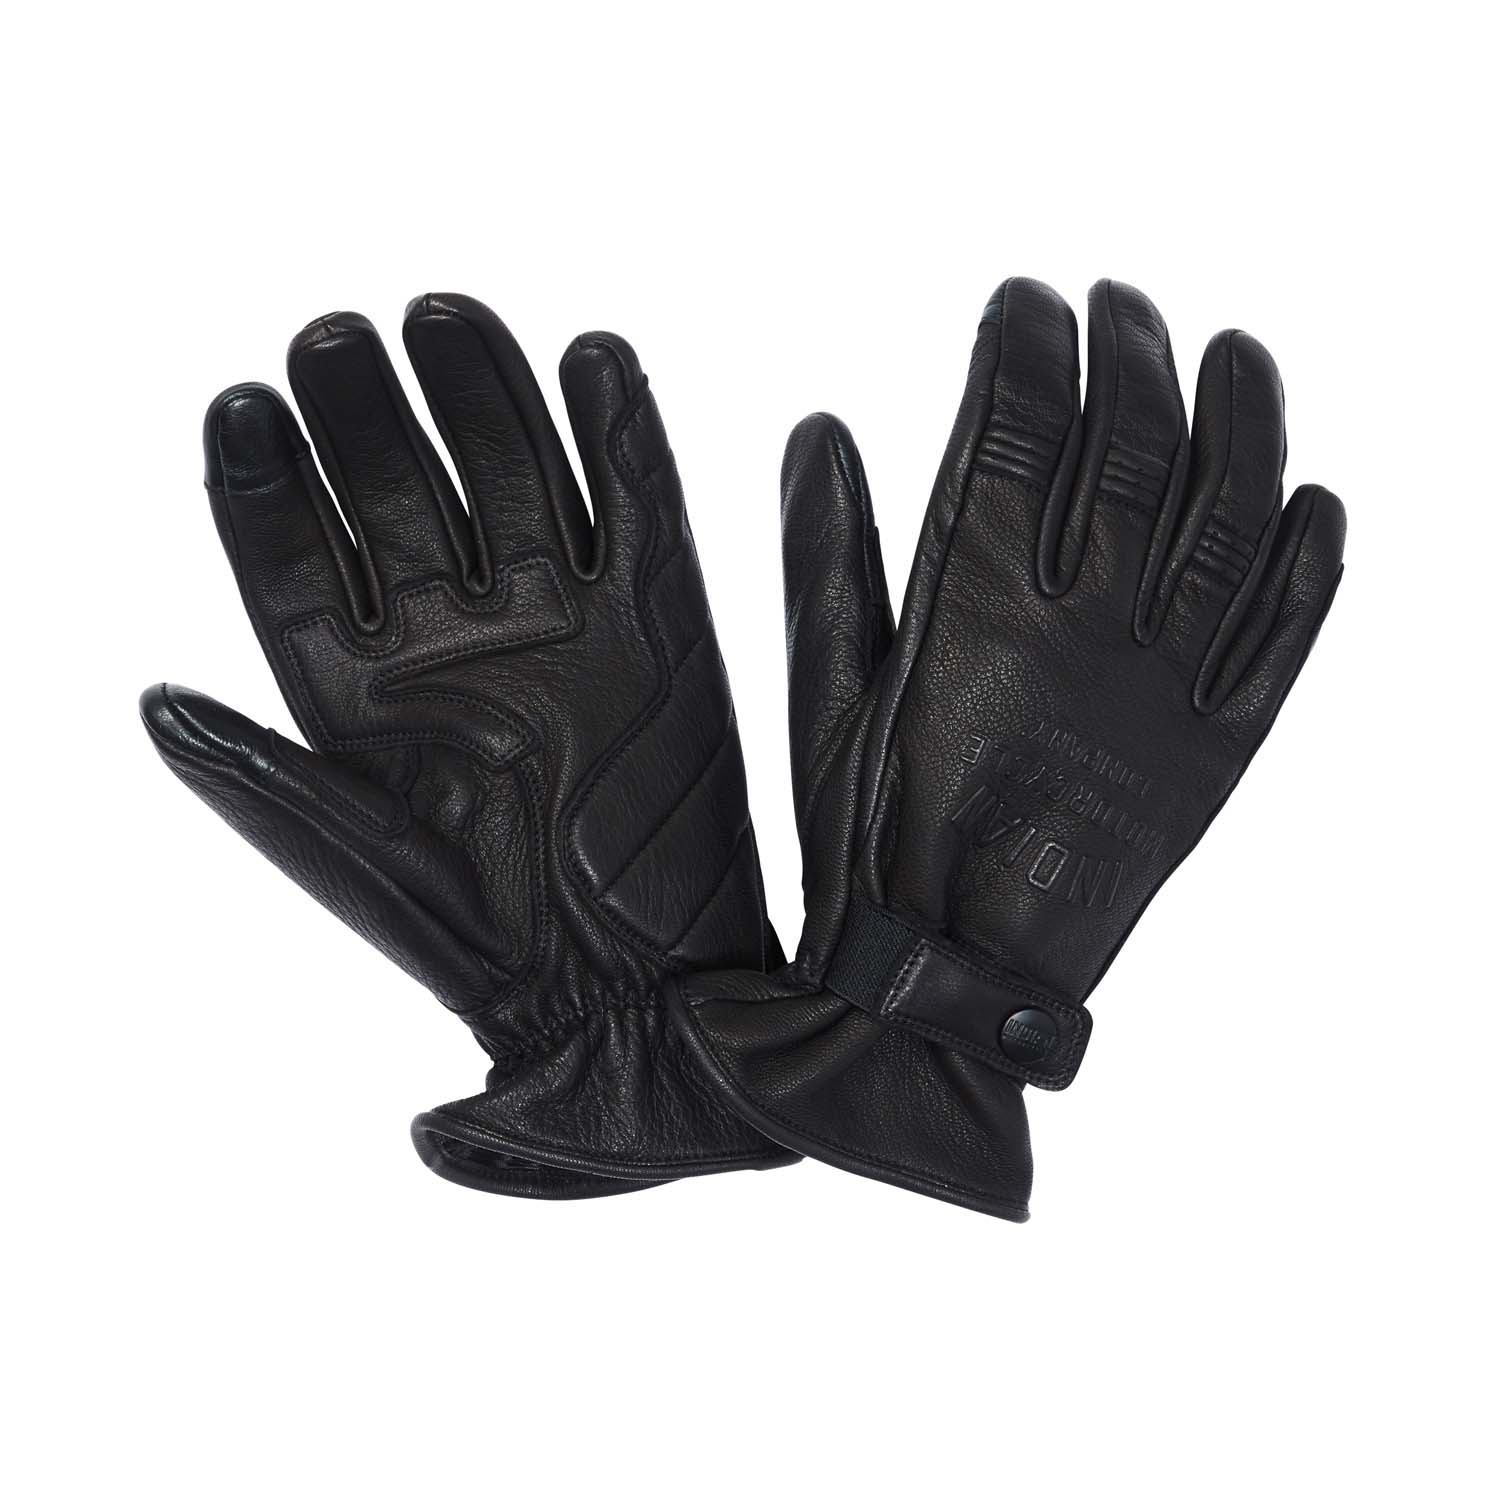 Men's Mesh 2 Warm Weather Riding Gloves, Black | Indian Motorcycle